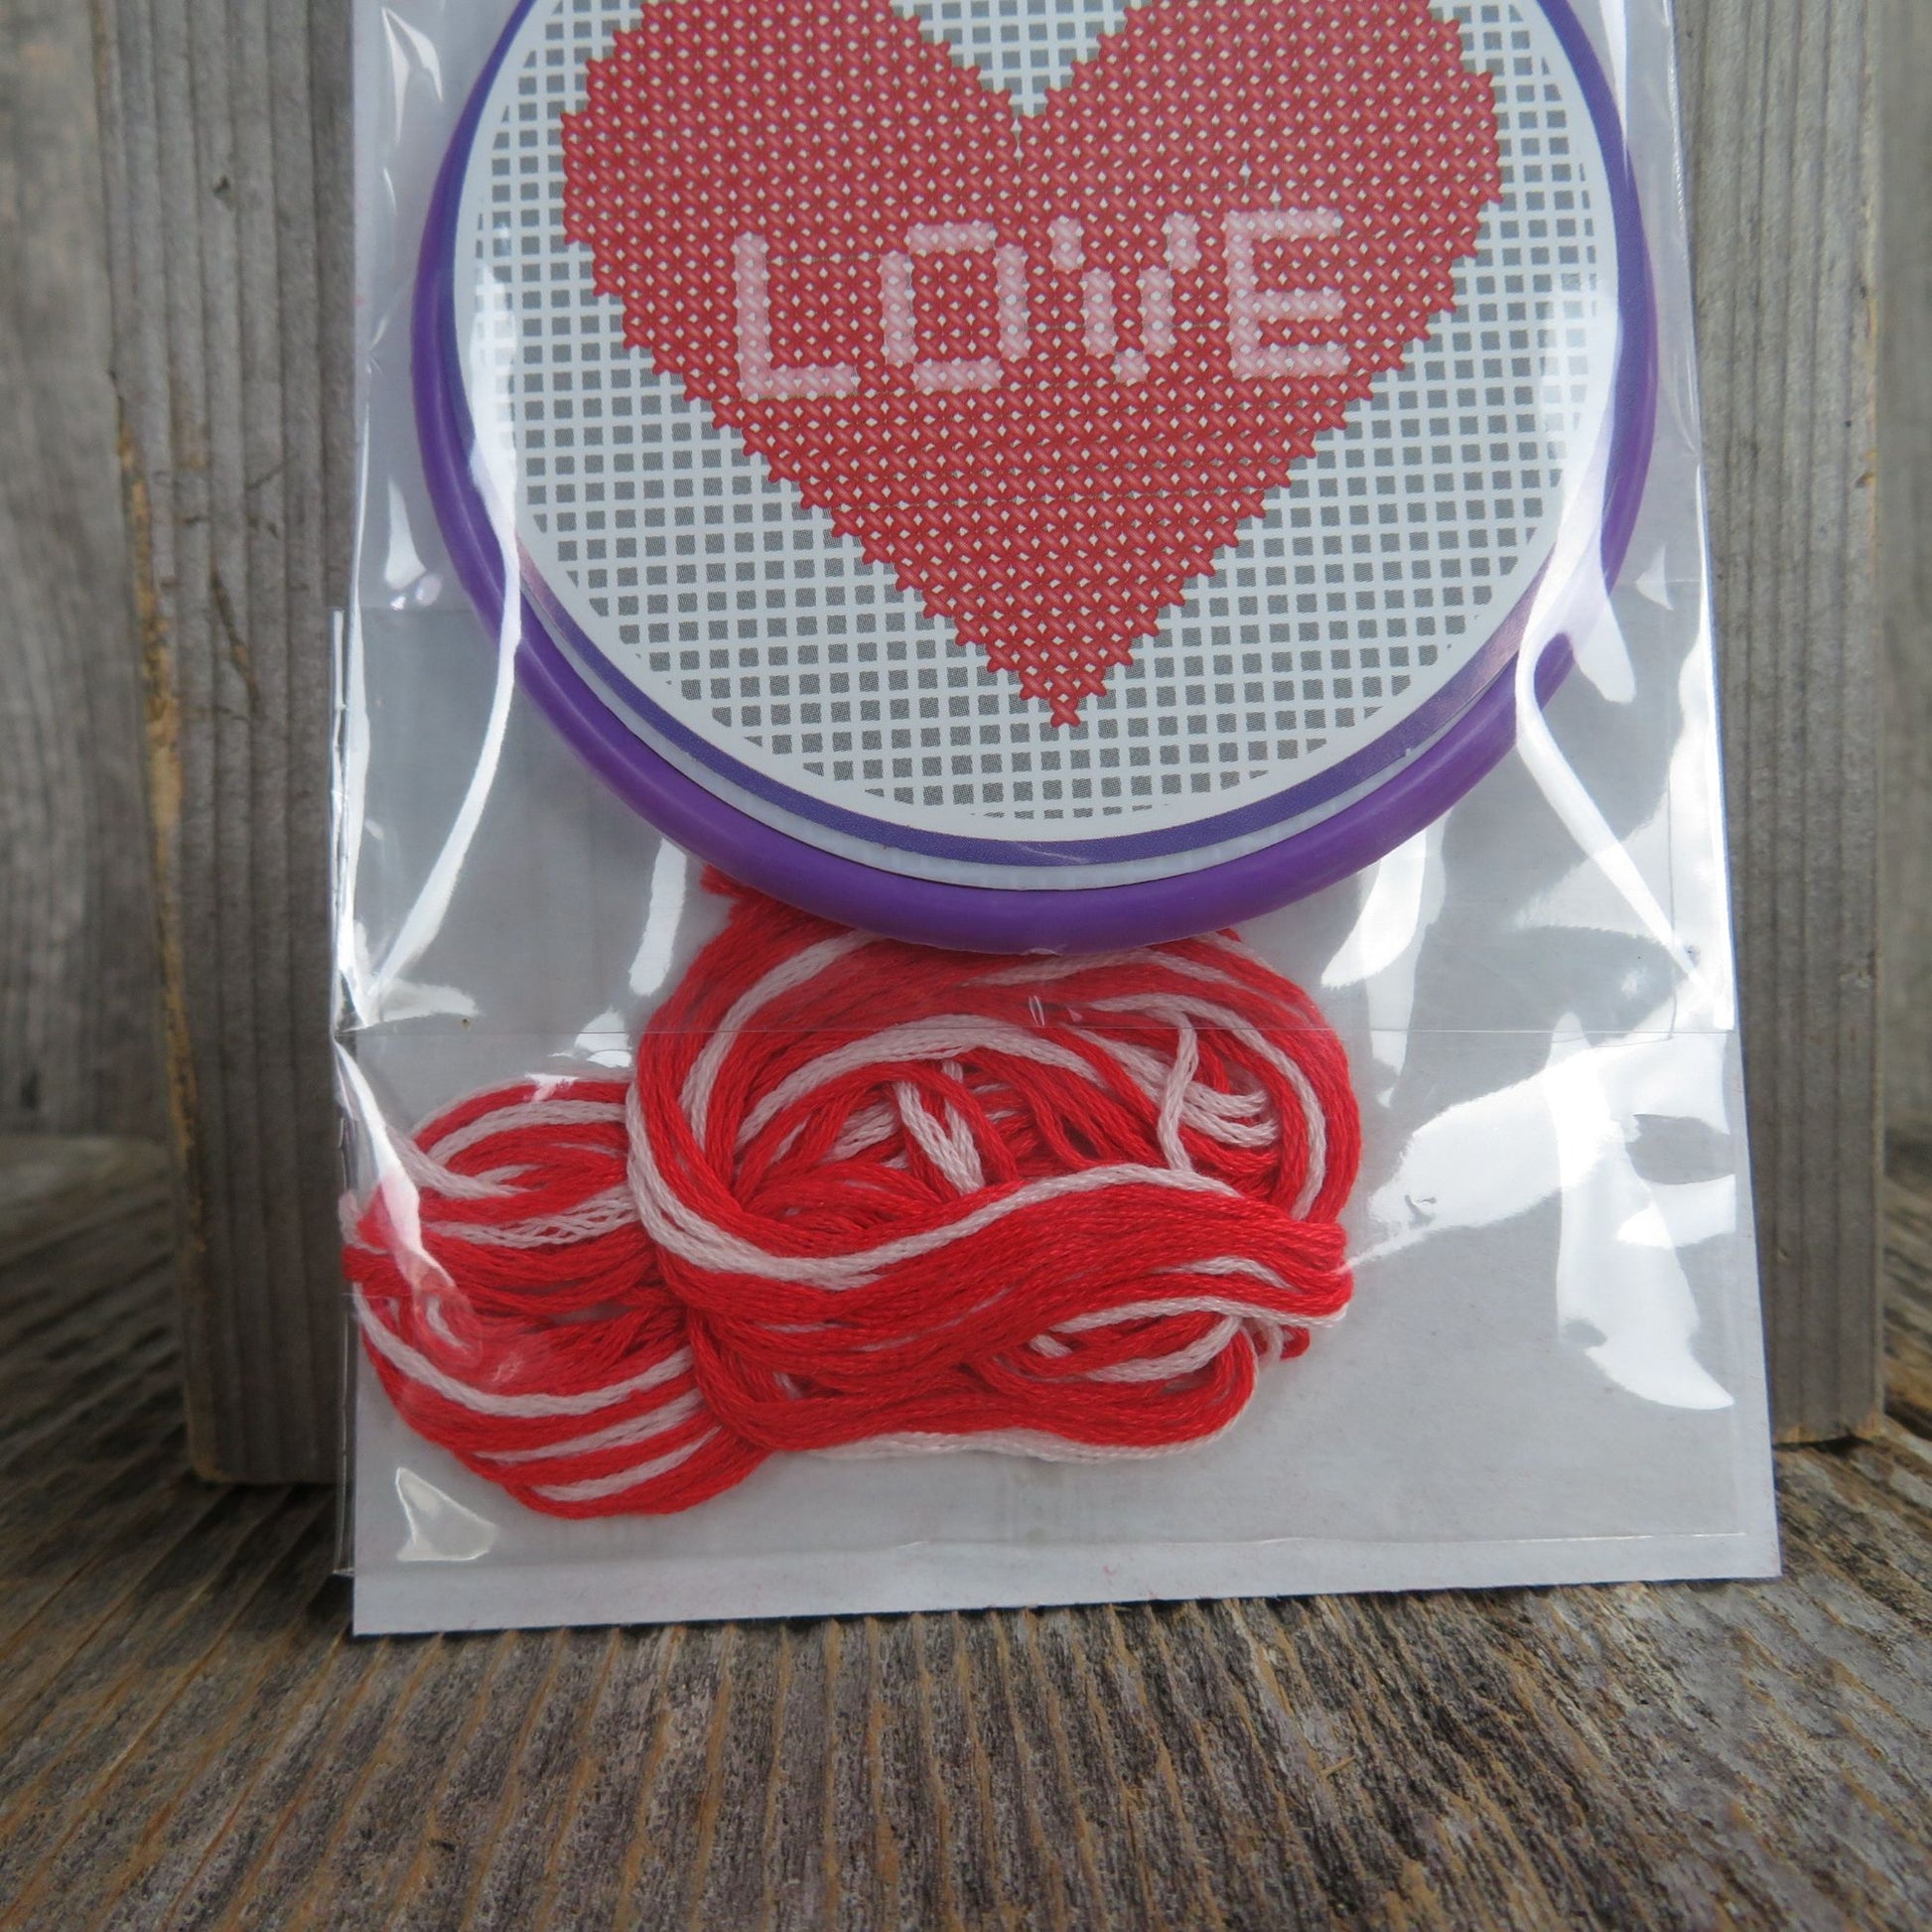 Creative Kids Cross Stitch Fun Heart Plastic Canvas Kit Crafts New